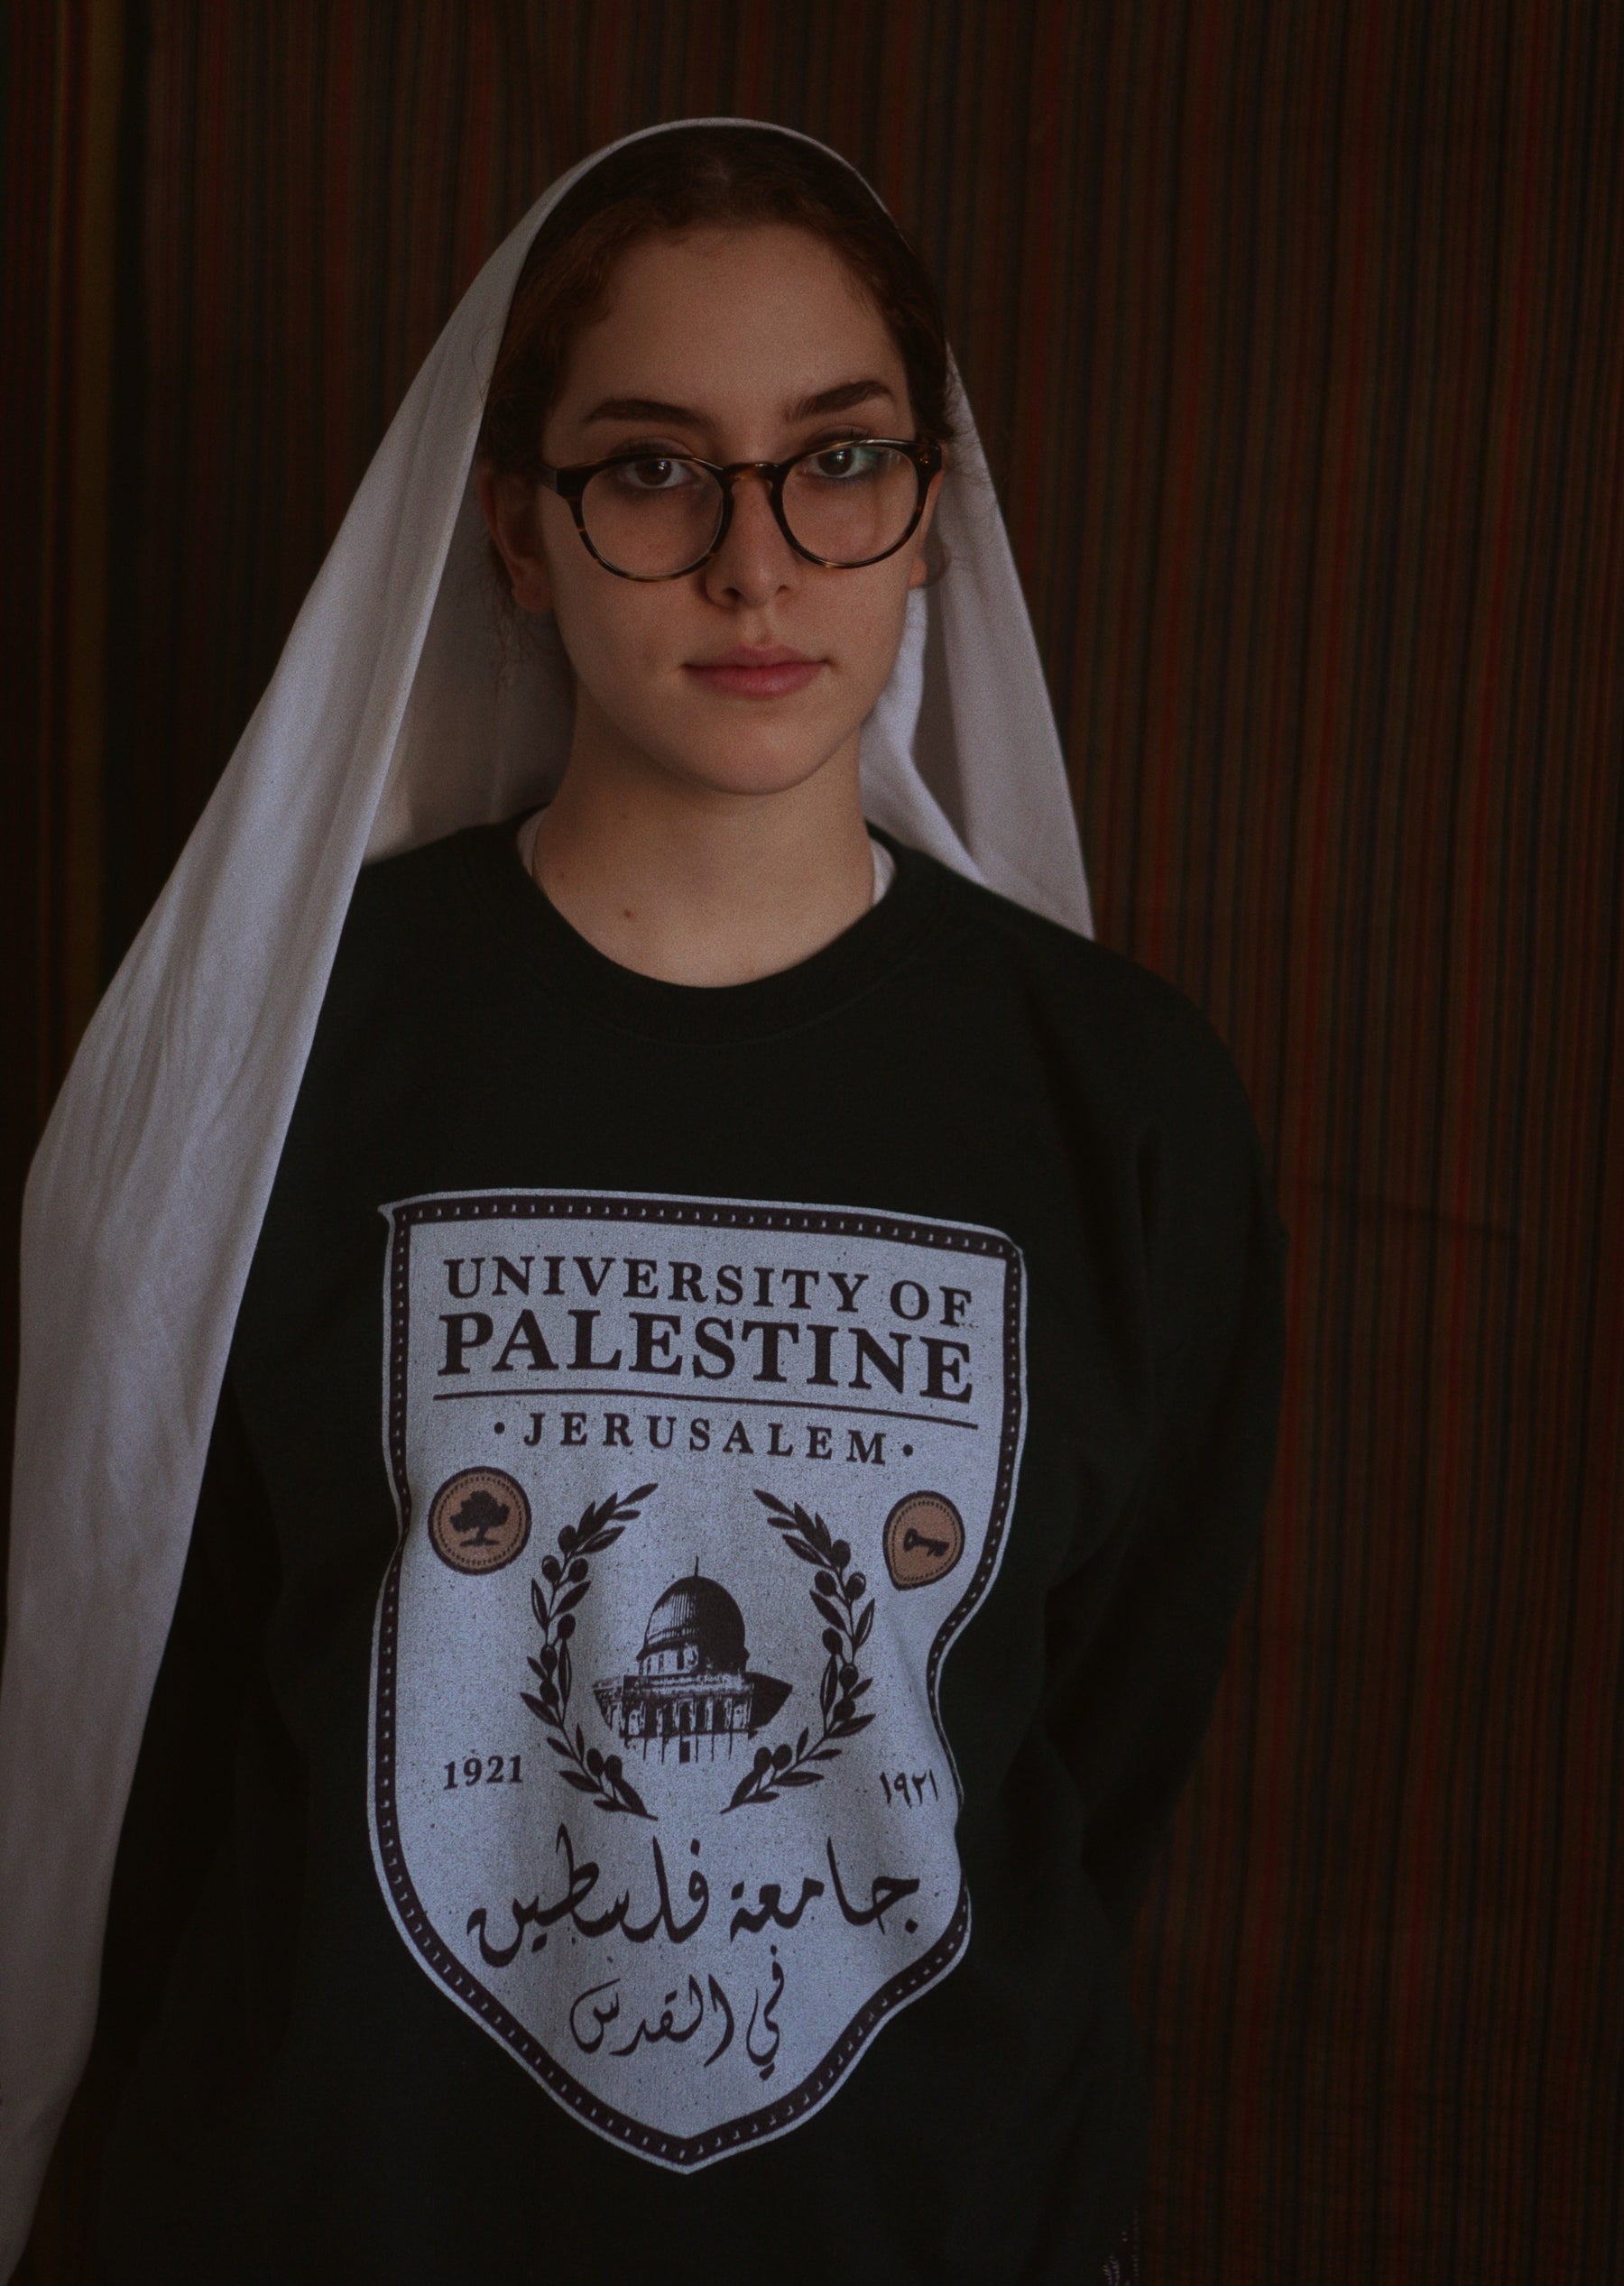 University of Palestine – T Shirt